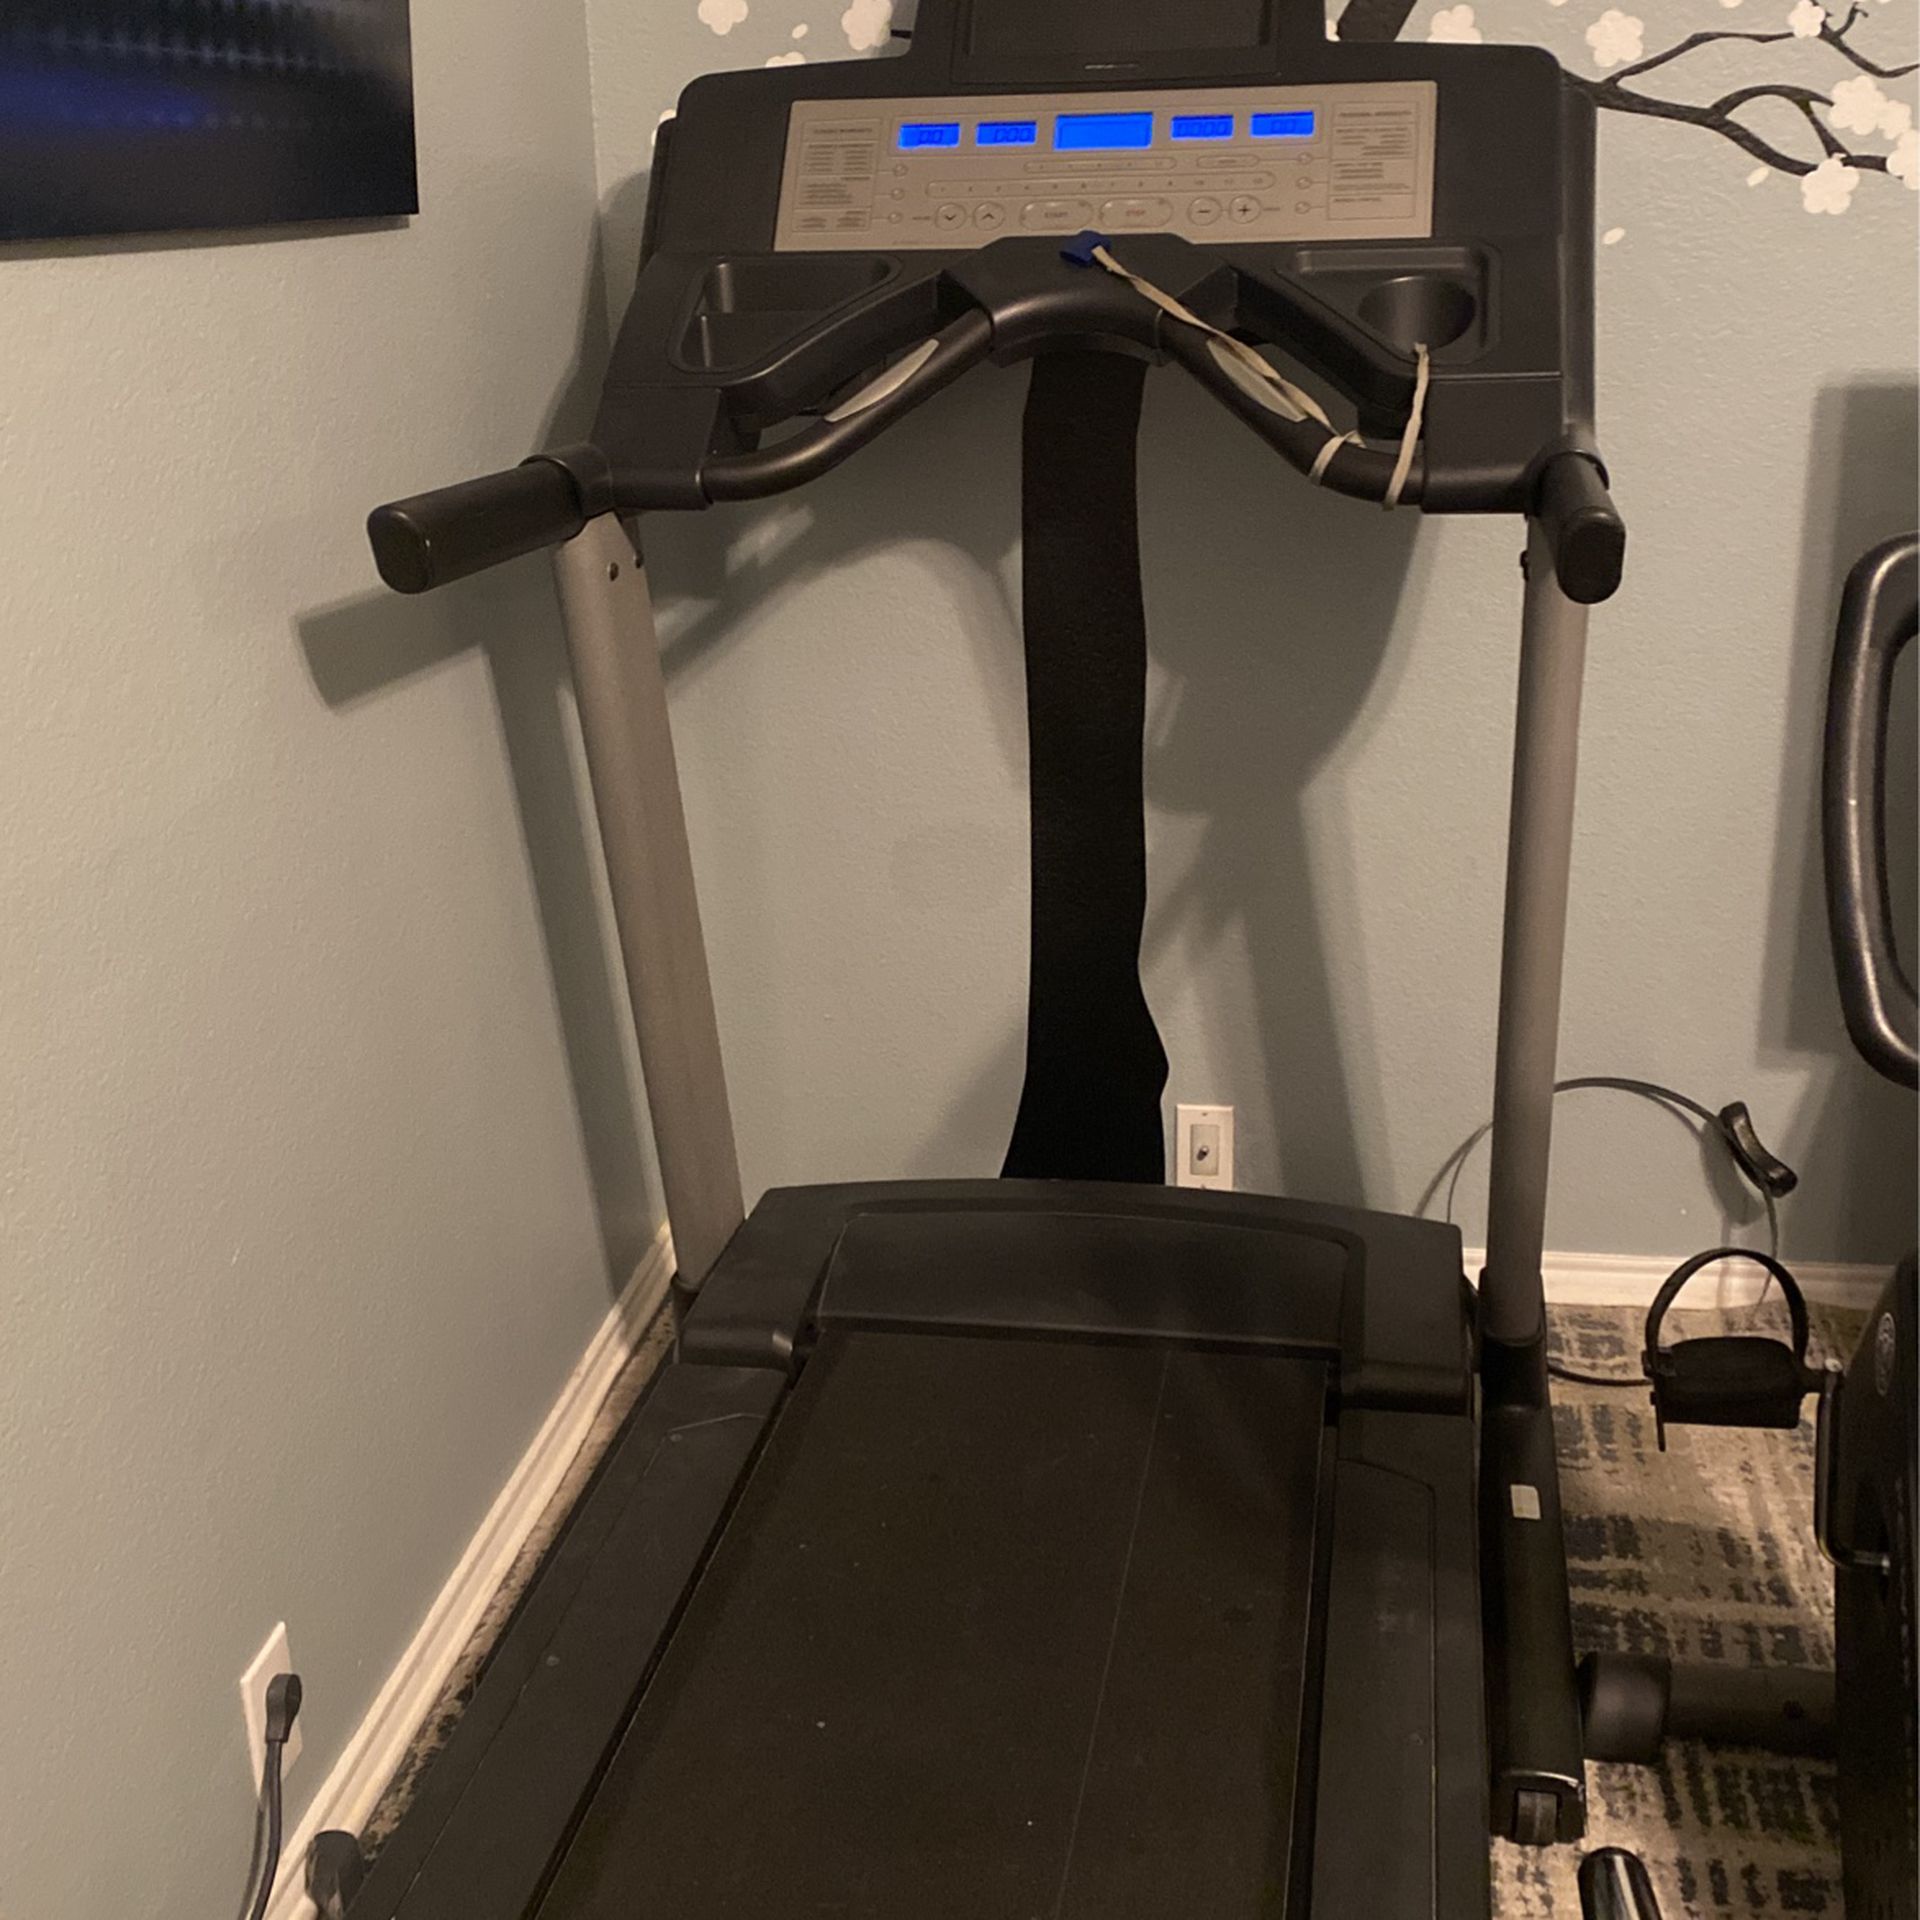 Reebok Treadmill 